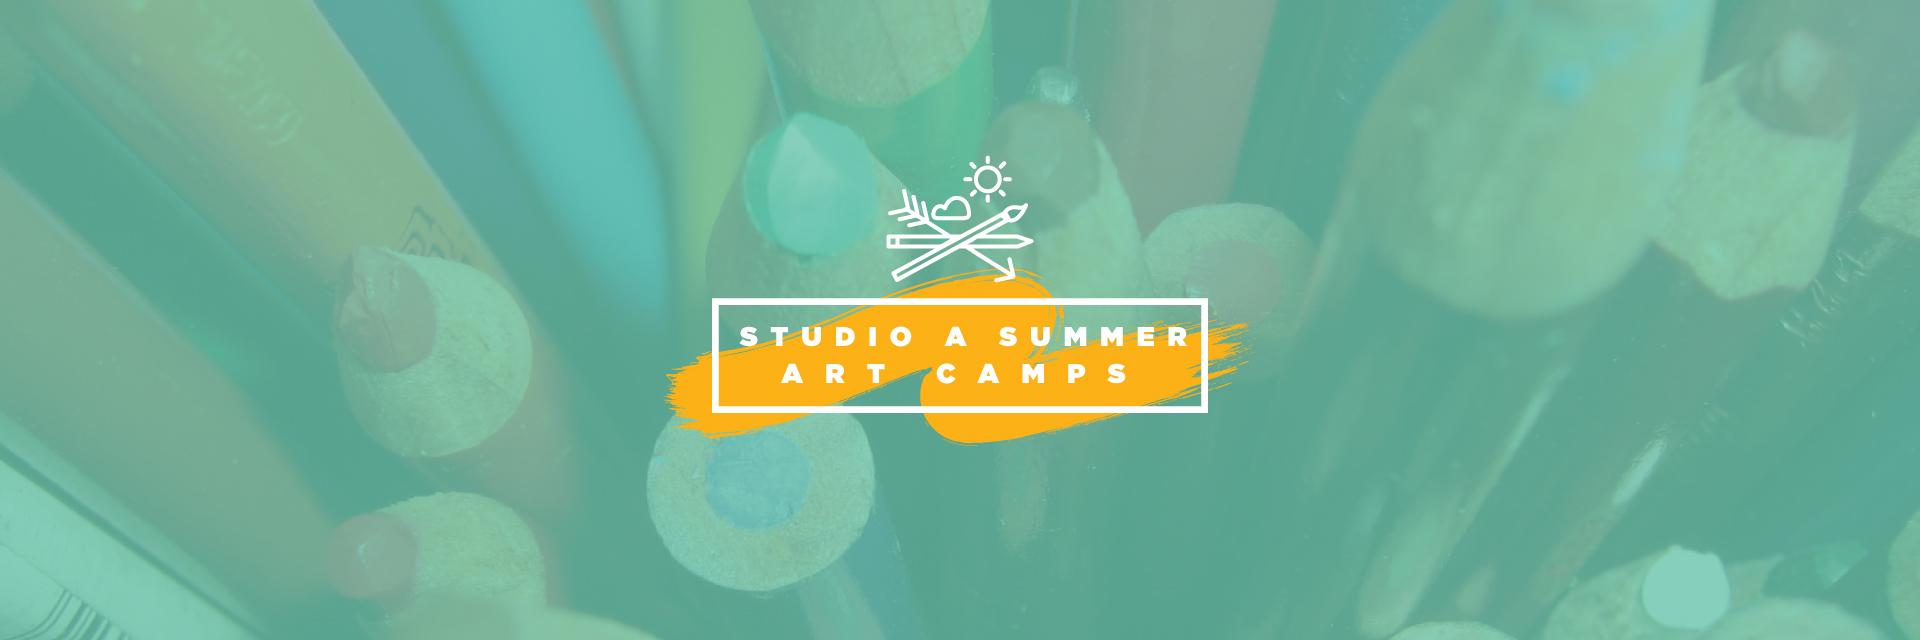 Studio A Summer Art Camps for Kids